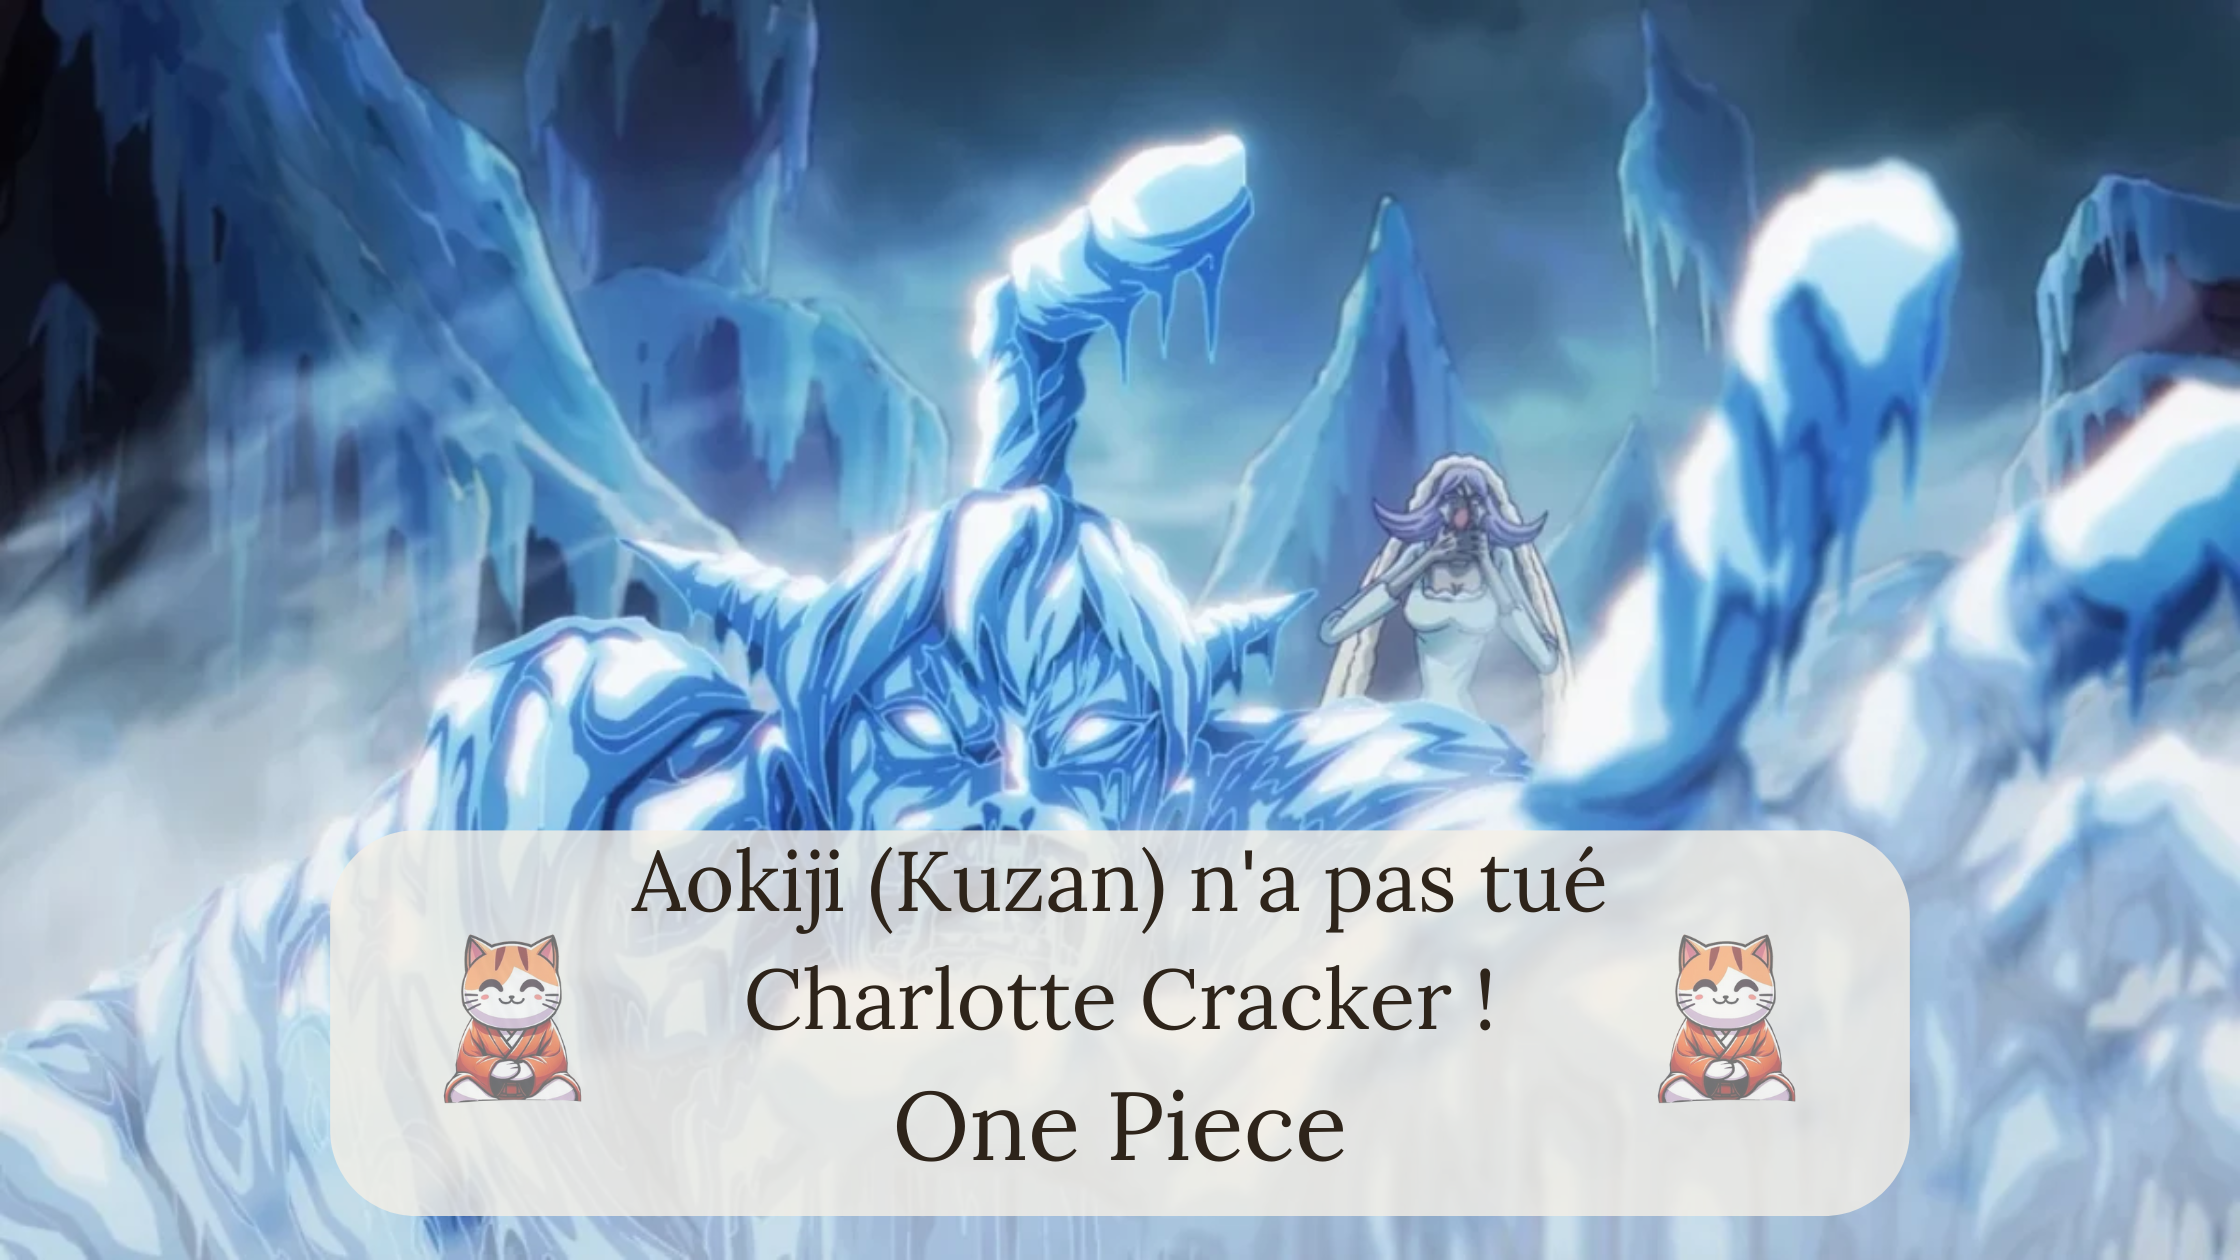 Aokiji (Kuzan) n'a pas tué Charlotte Cracker !